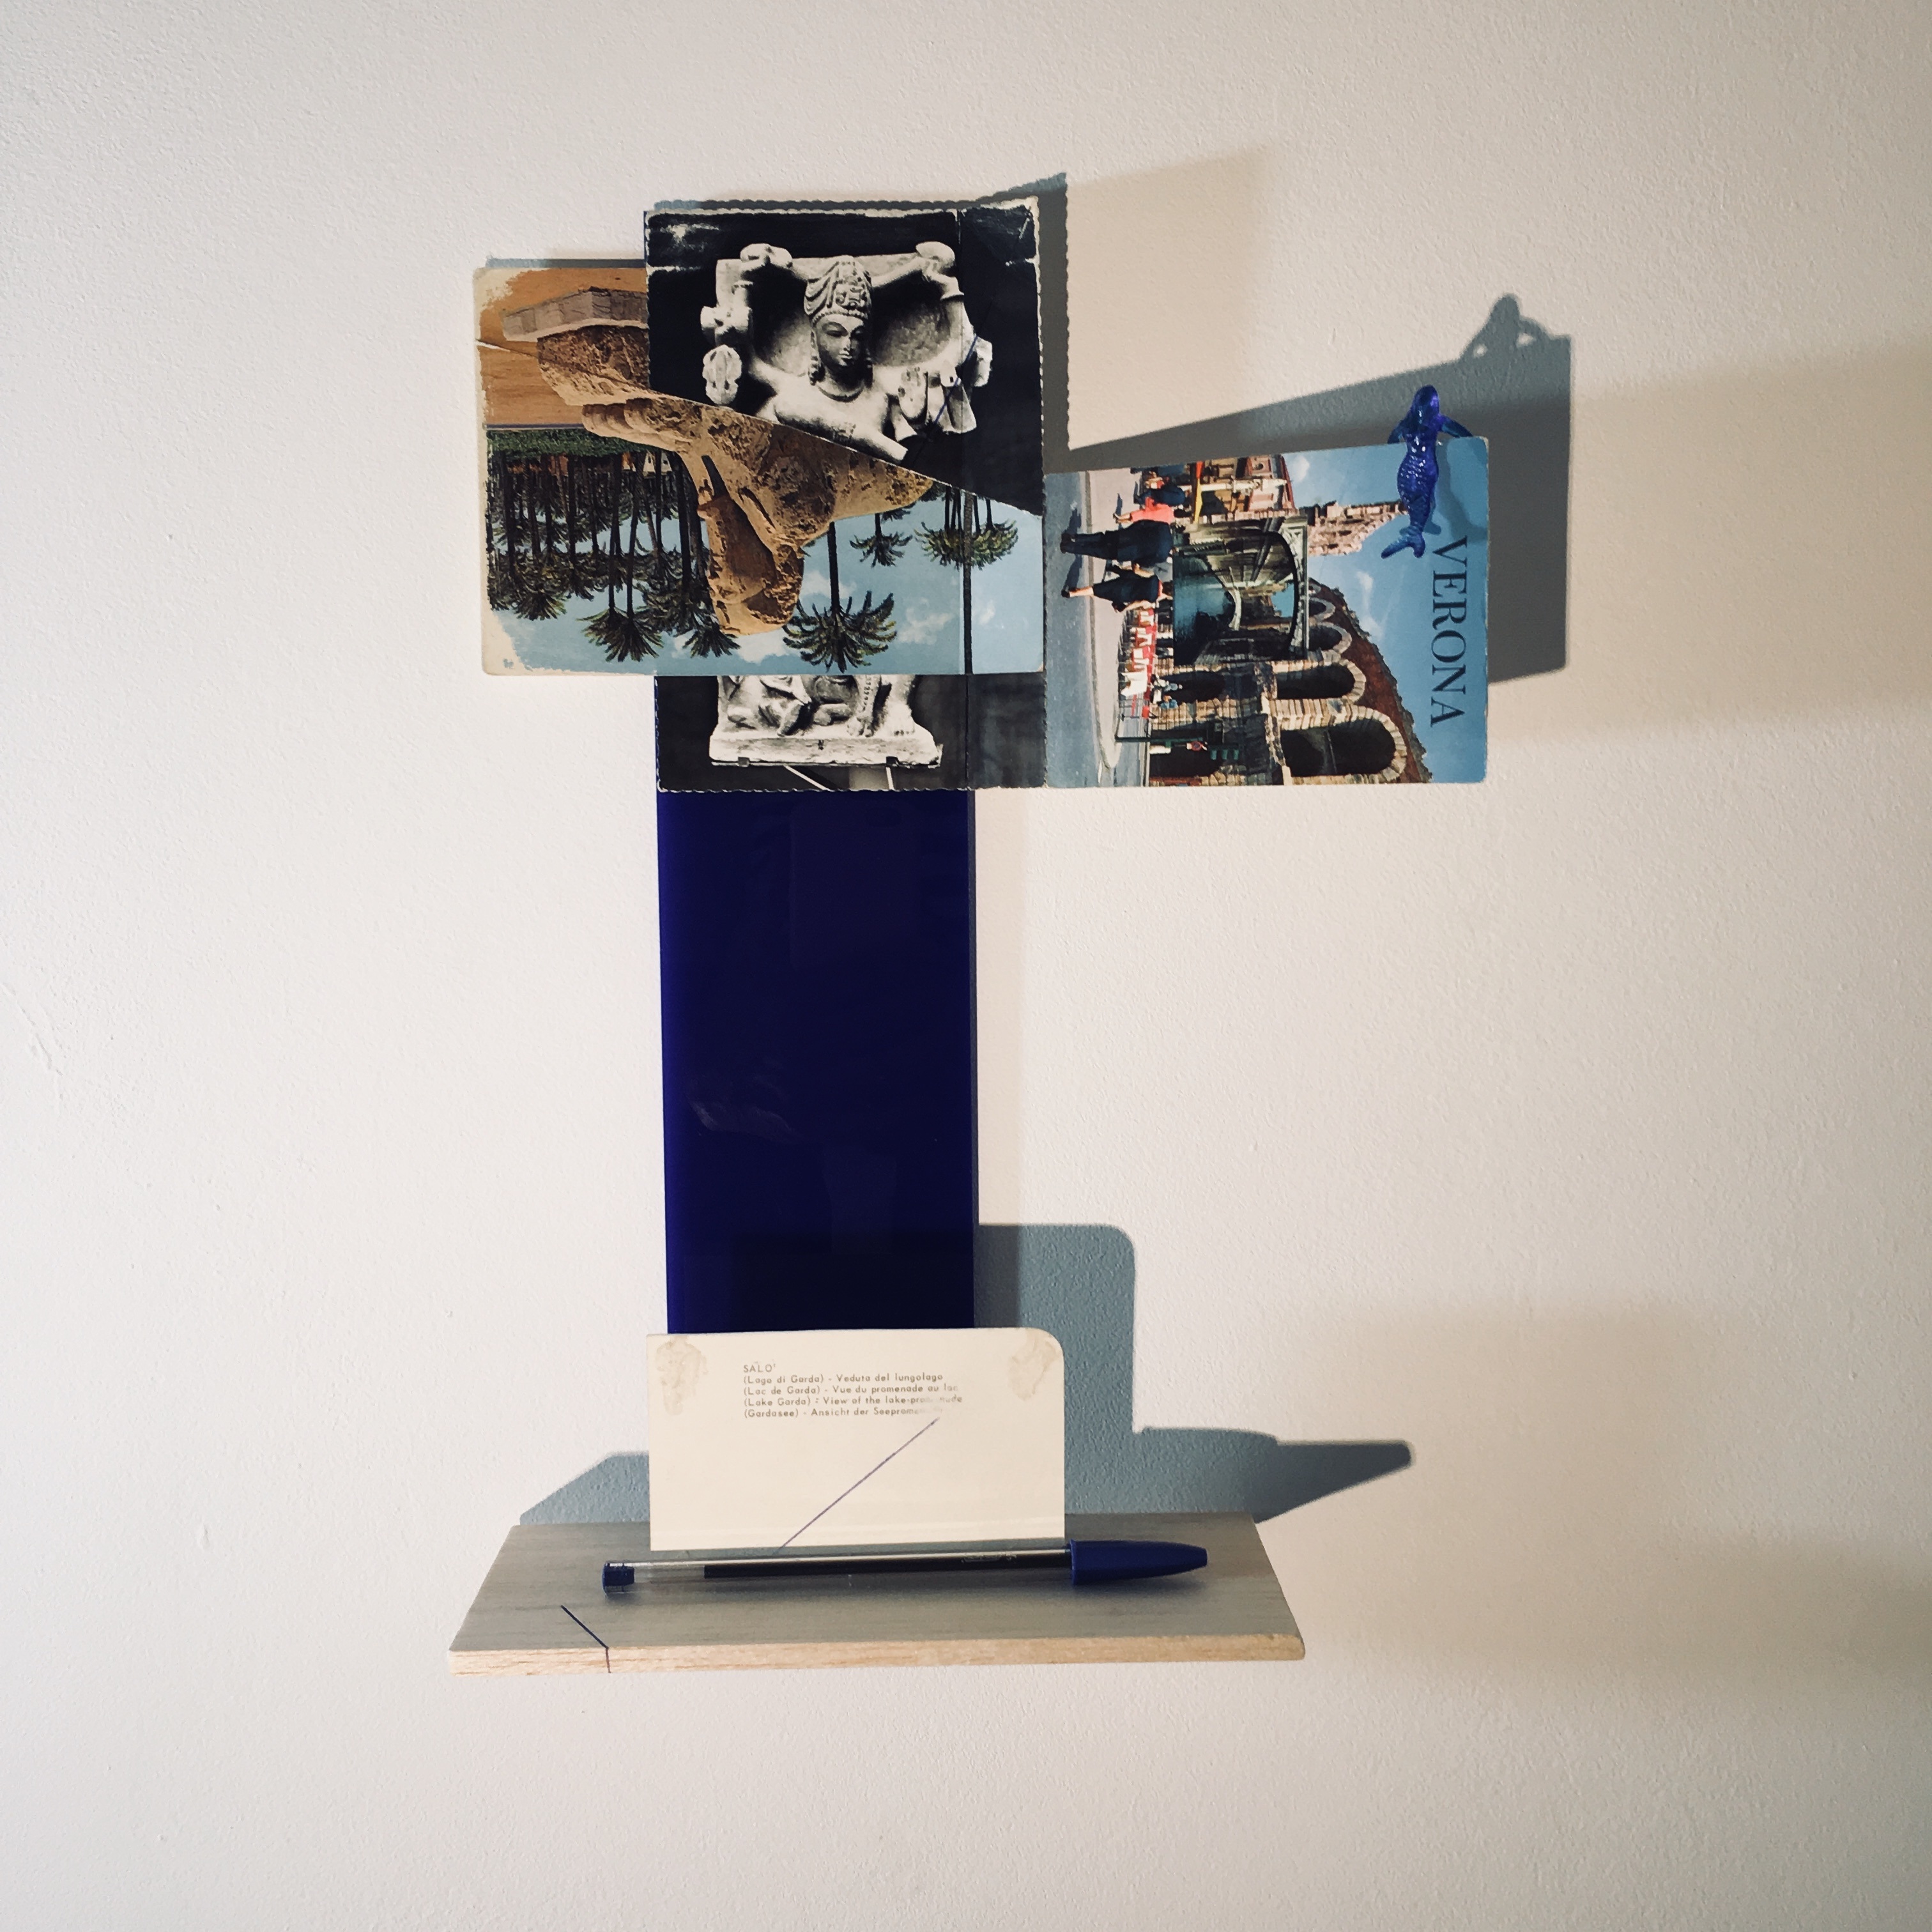 Gê Orthof, Máquinas mínimas, Salo’ çiva verona sphinx, Acrílico, postais, balsa e miniatura plástica, desenho-assemblage, 35 x 25 x 9 cm, 2018